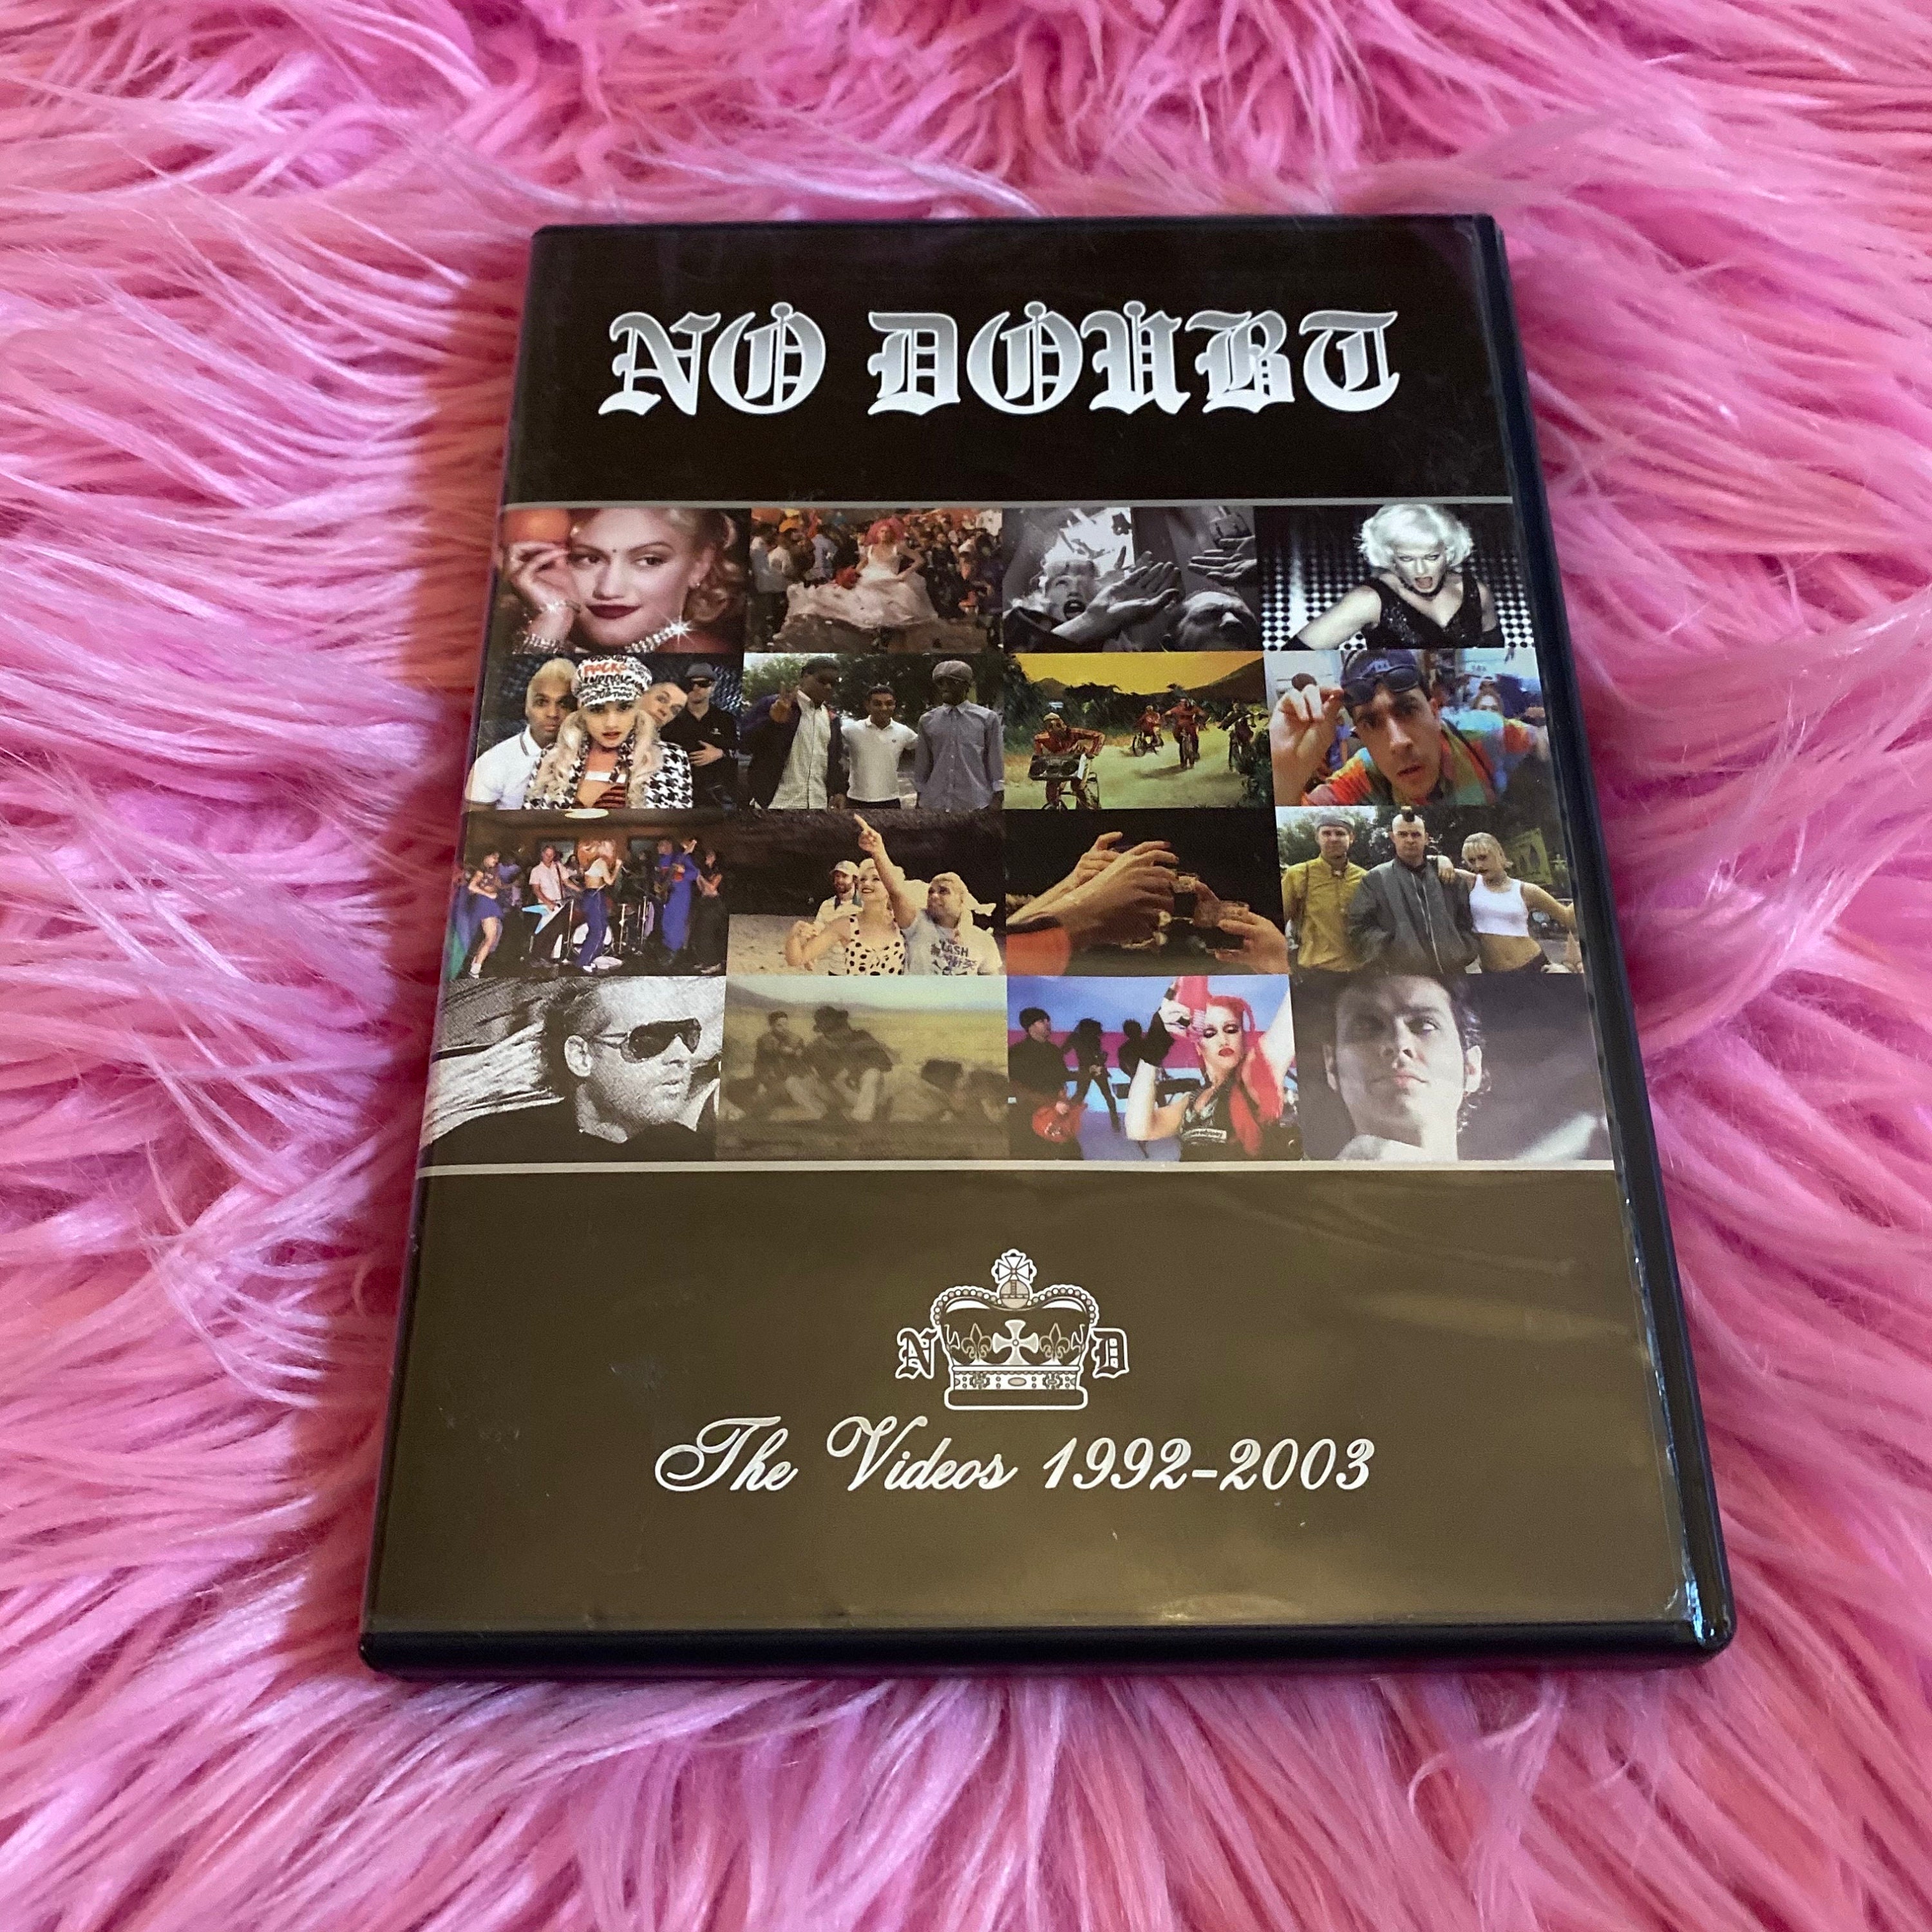 No Doubt: the Videos 1992-2003 Music Nostalgia DVD - Etsy